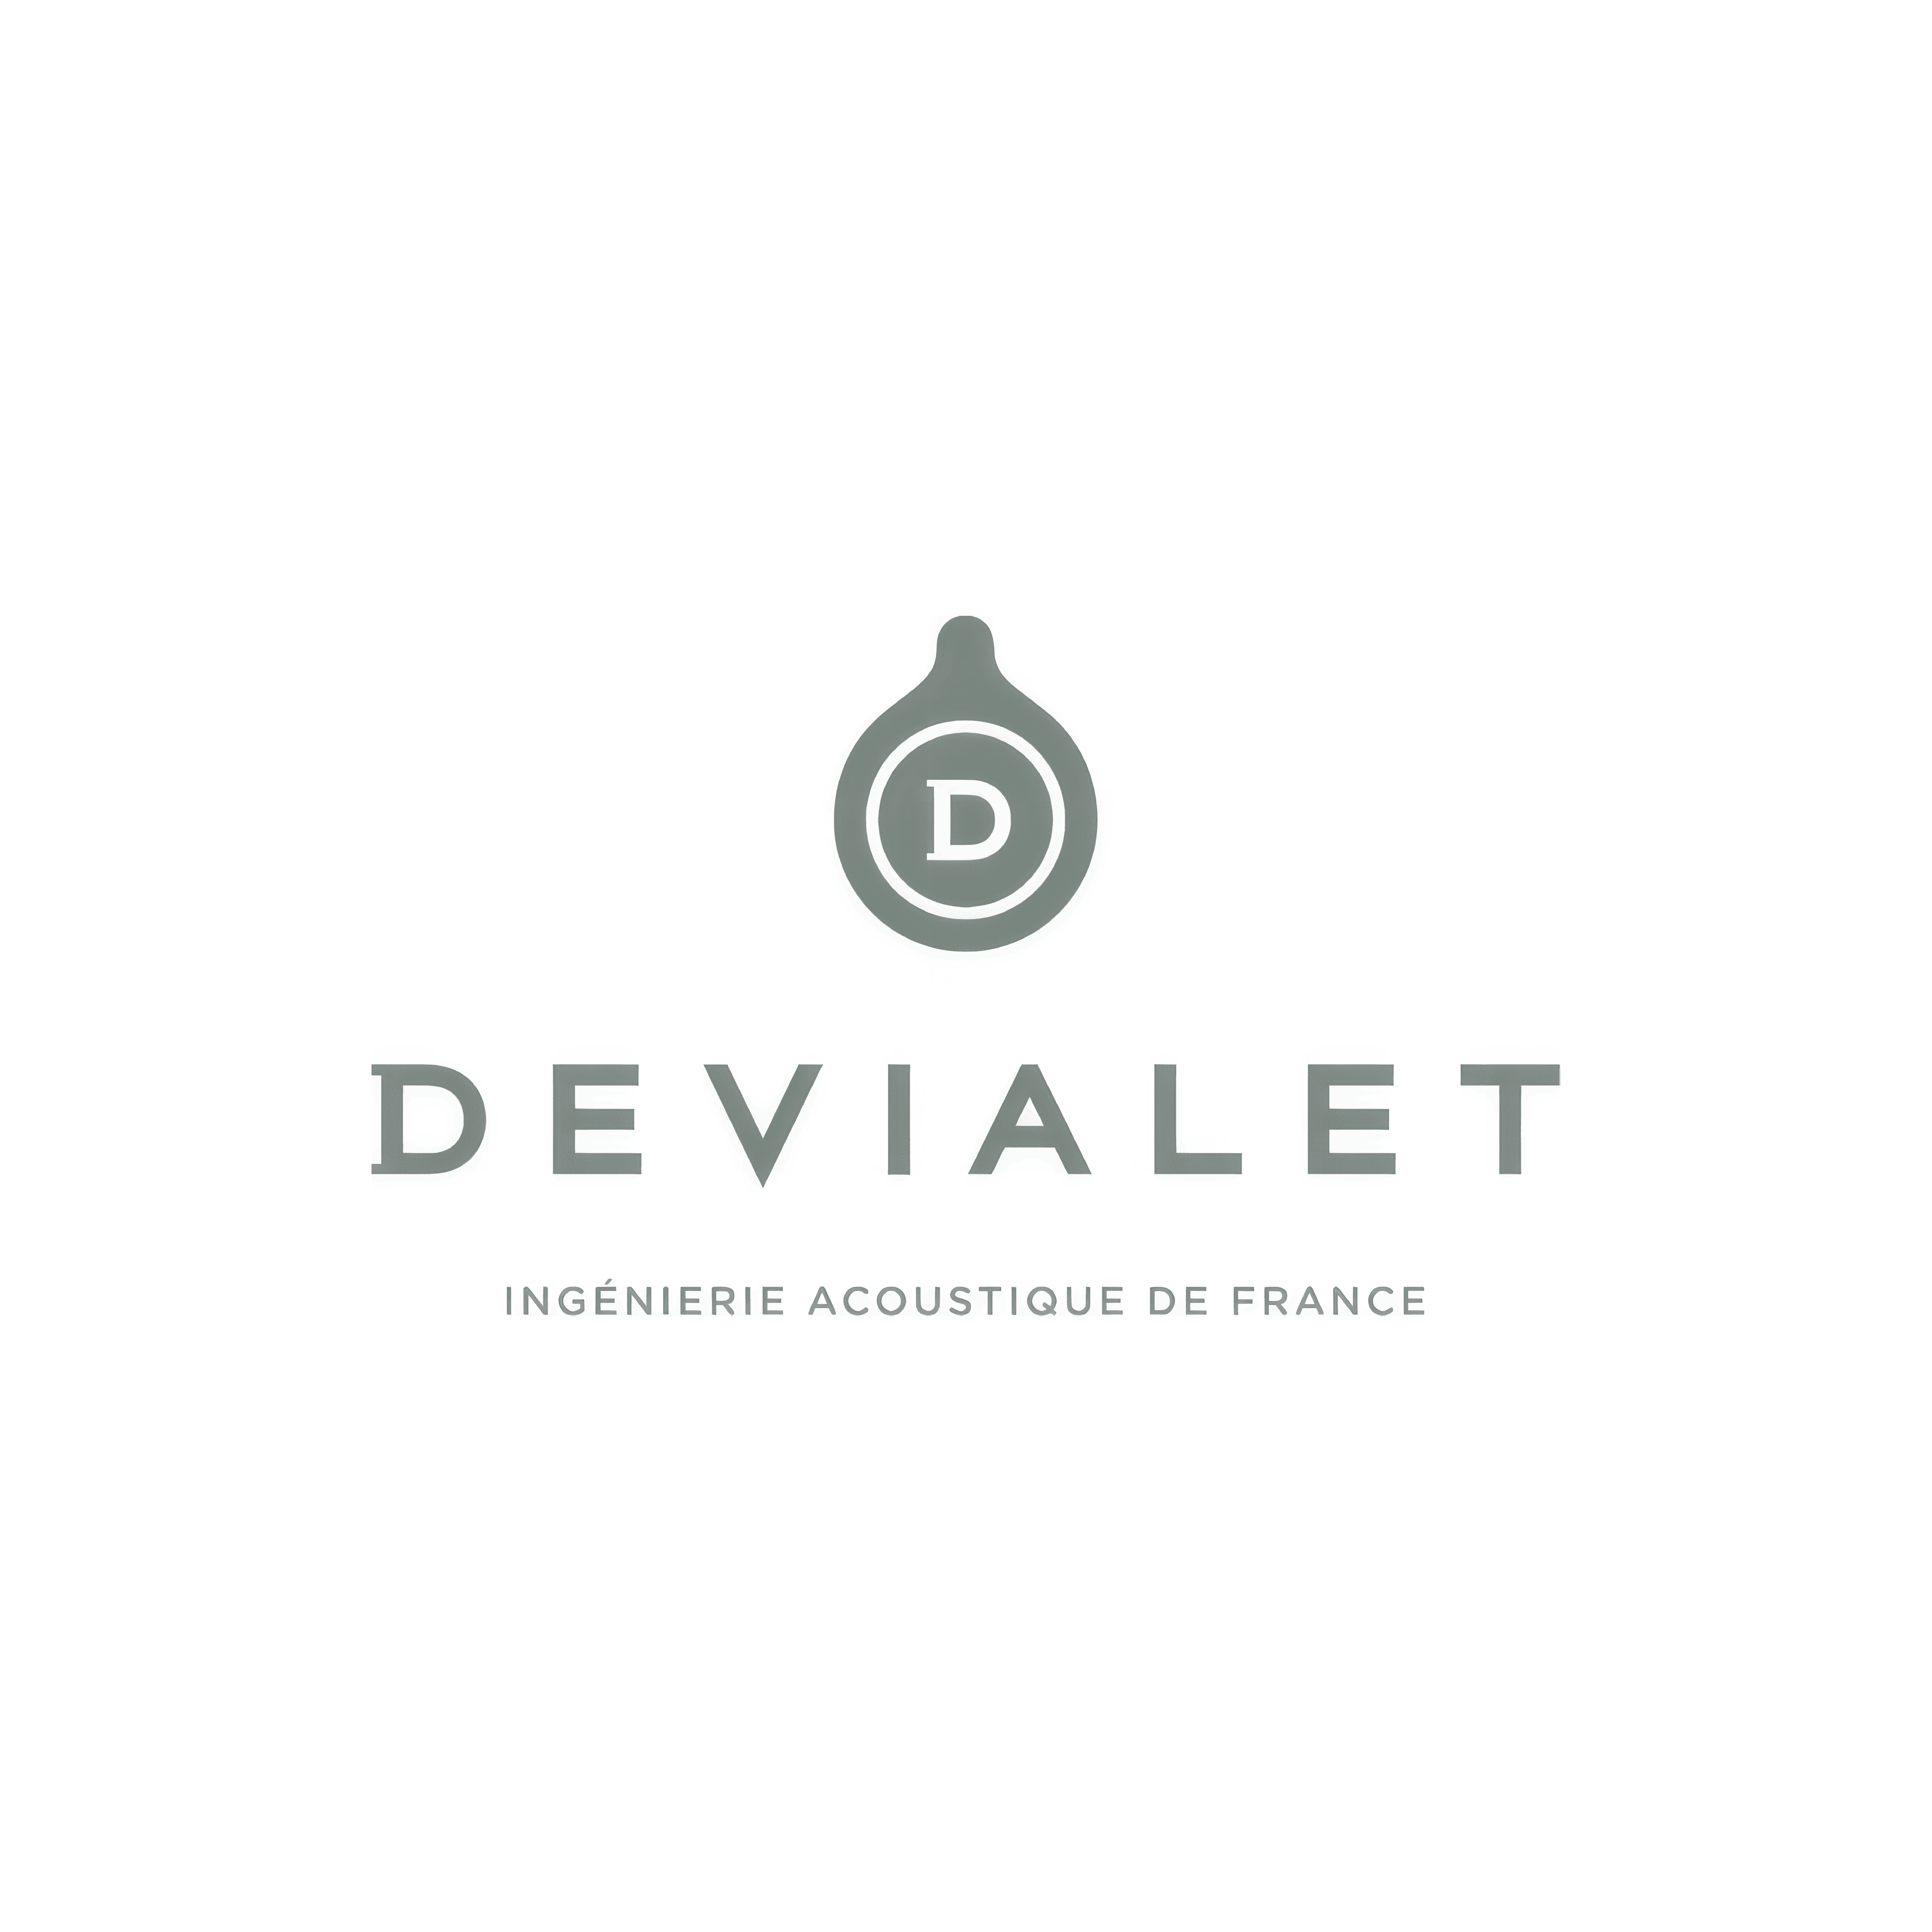 Devialet Co., Ltd